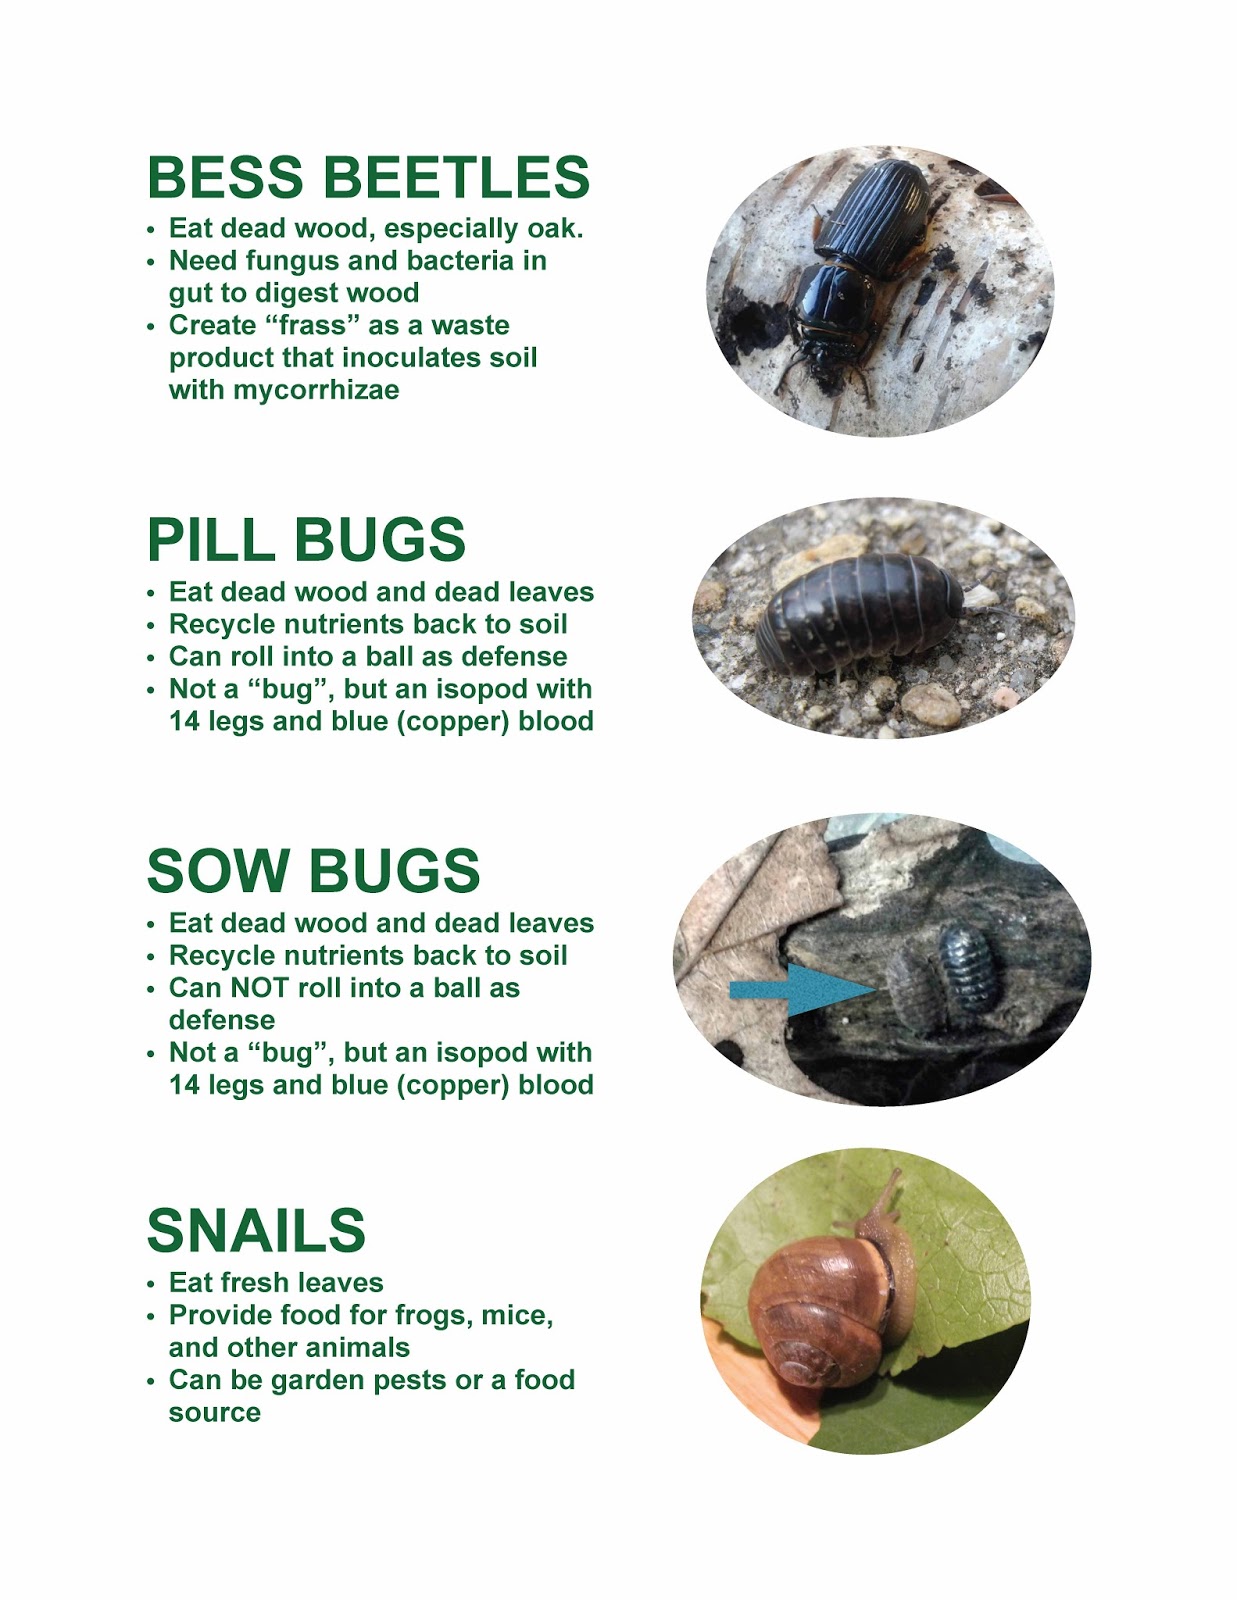 15 Minute Field Trips: Bess Beetles